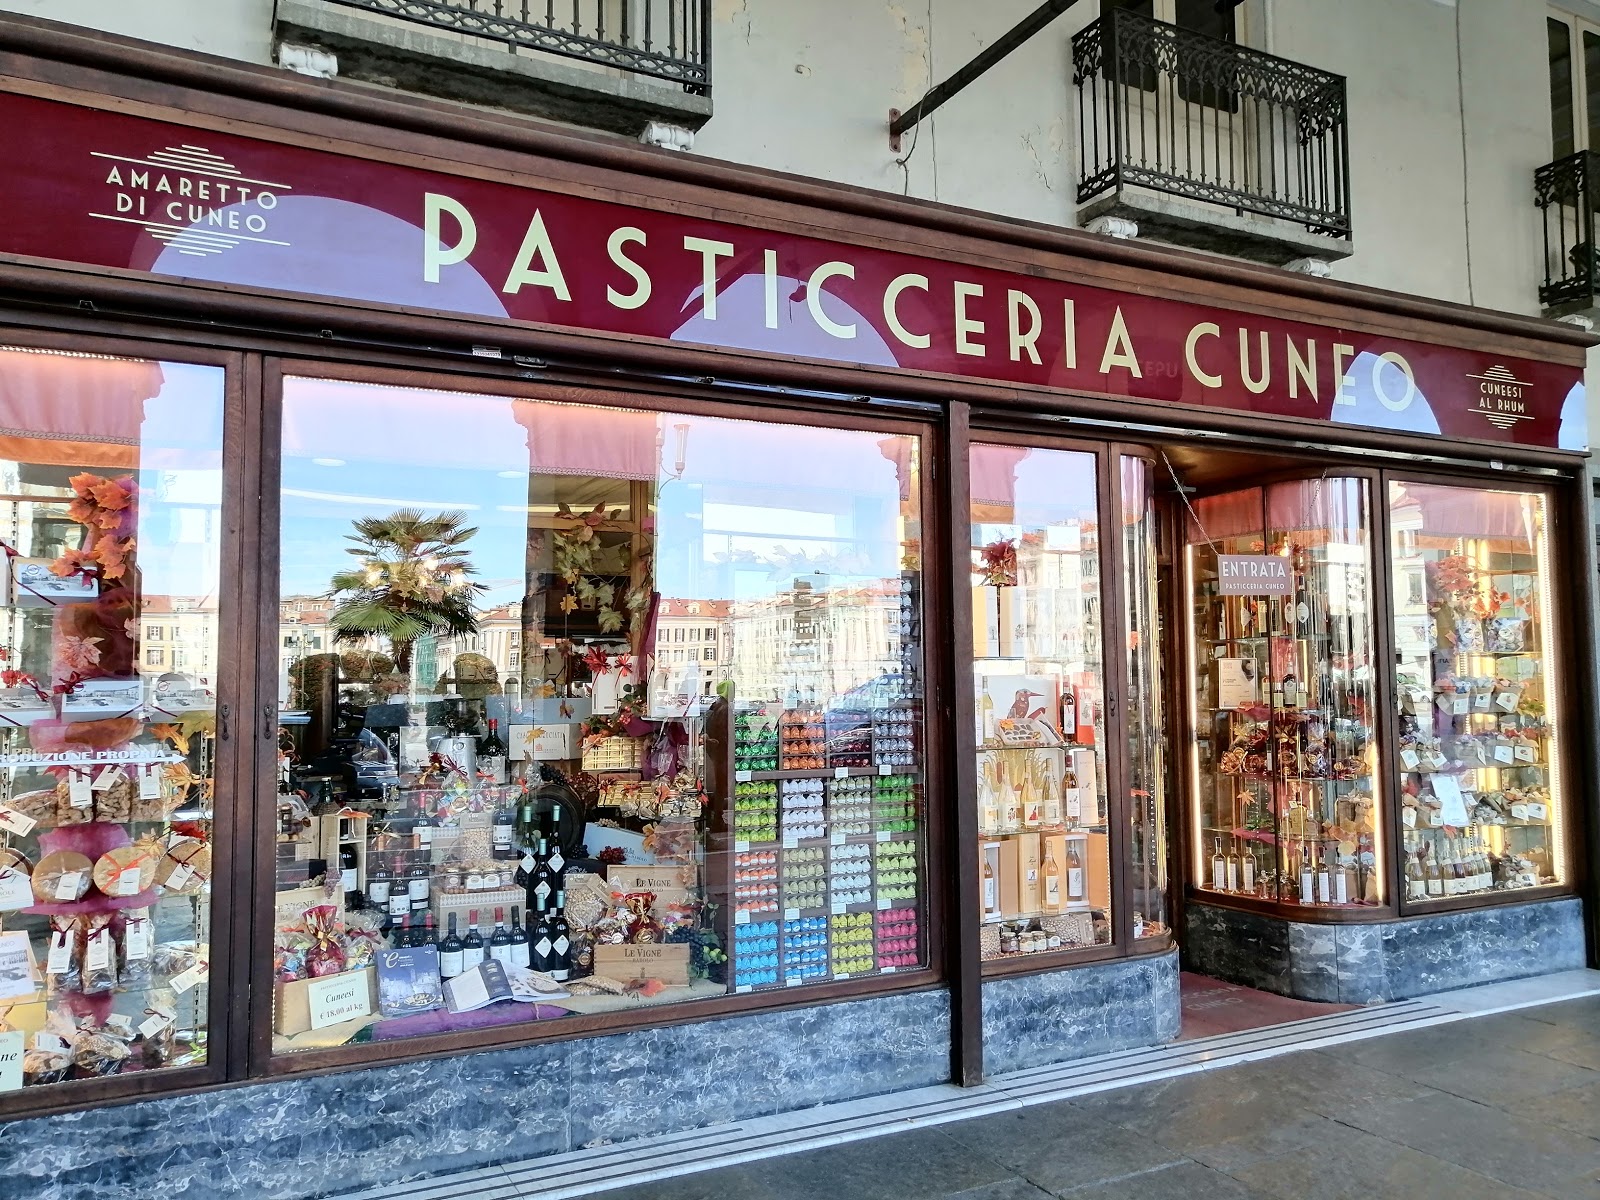 Foto di Pasticceria Cuneo - Semplice, Goloso, Senza Glutine